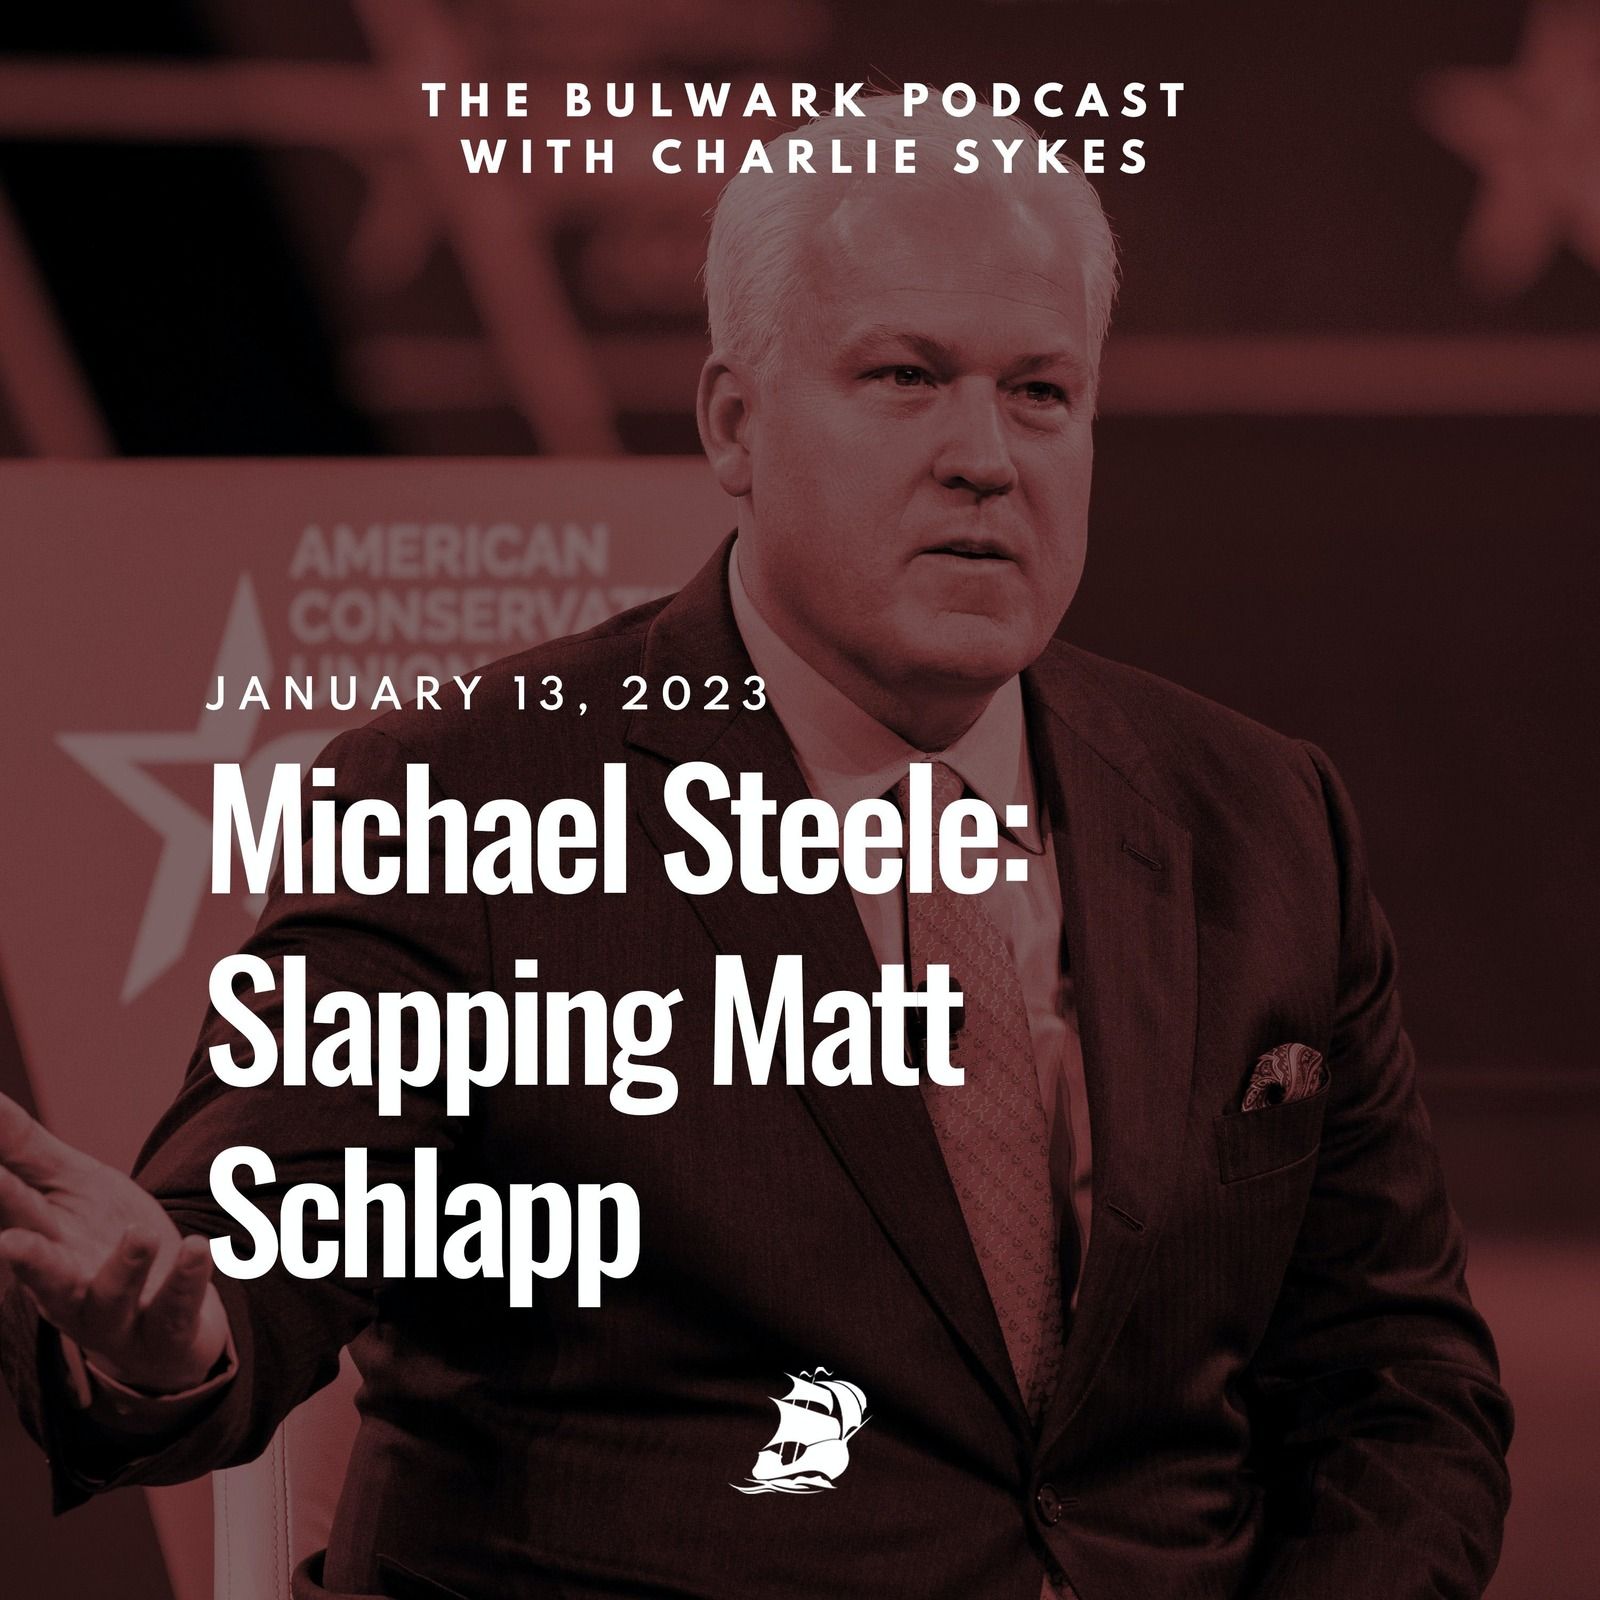 Michael Steele: Slapping Matt Schlapp by The Bulwark Podcast